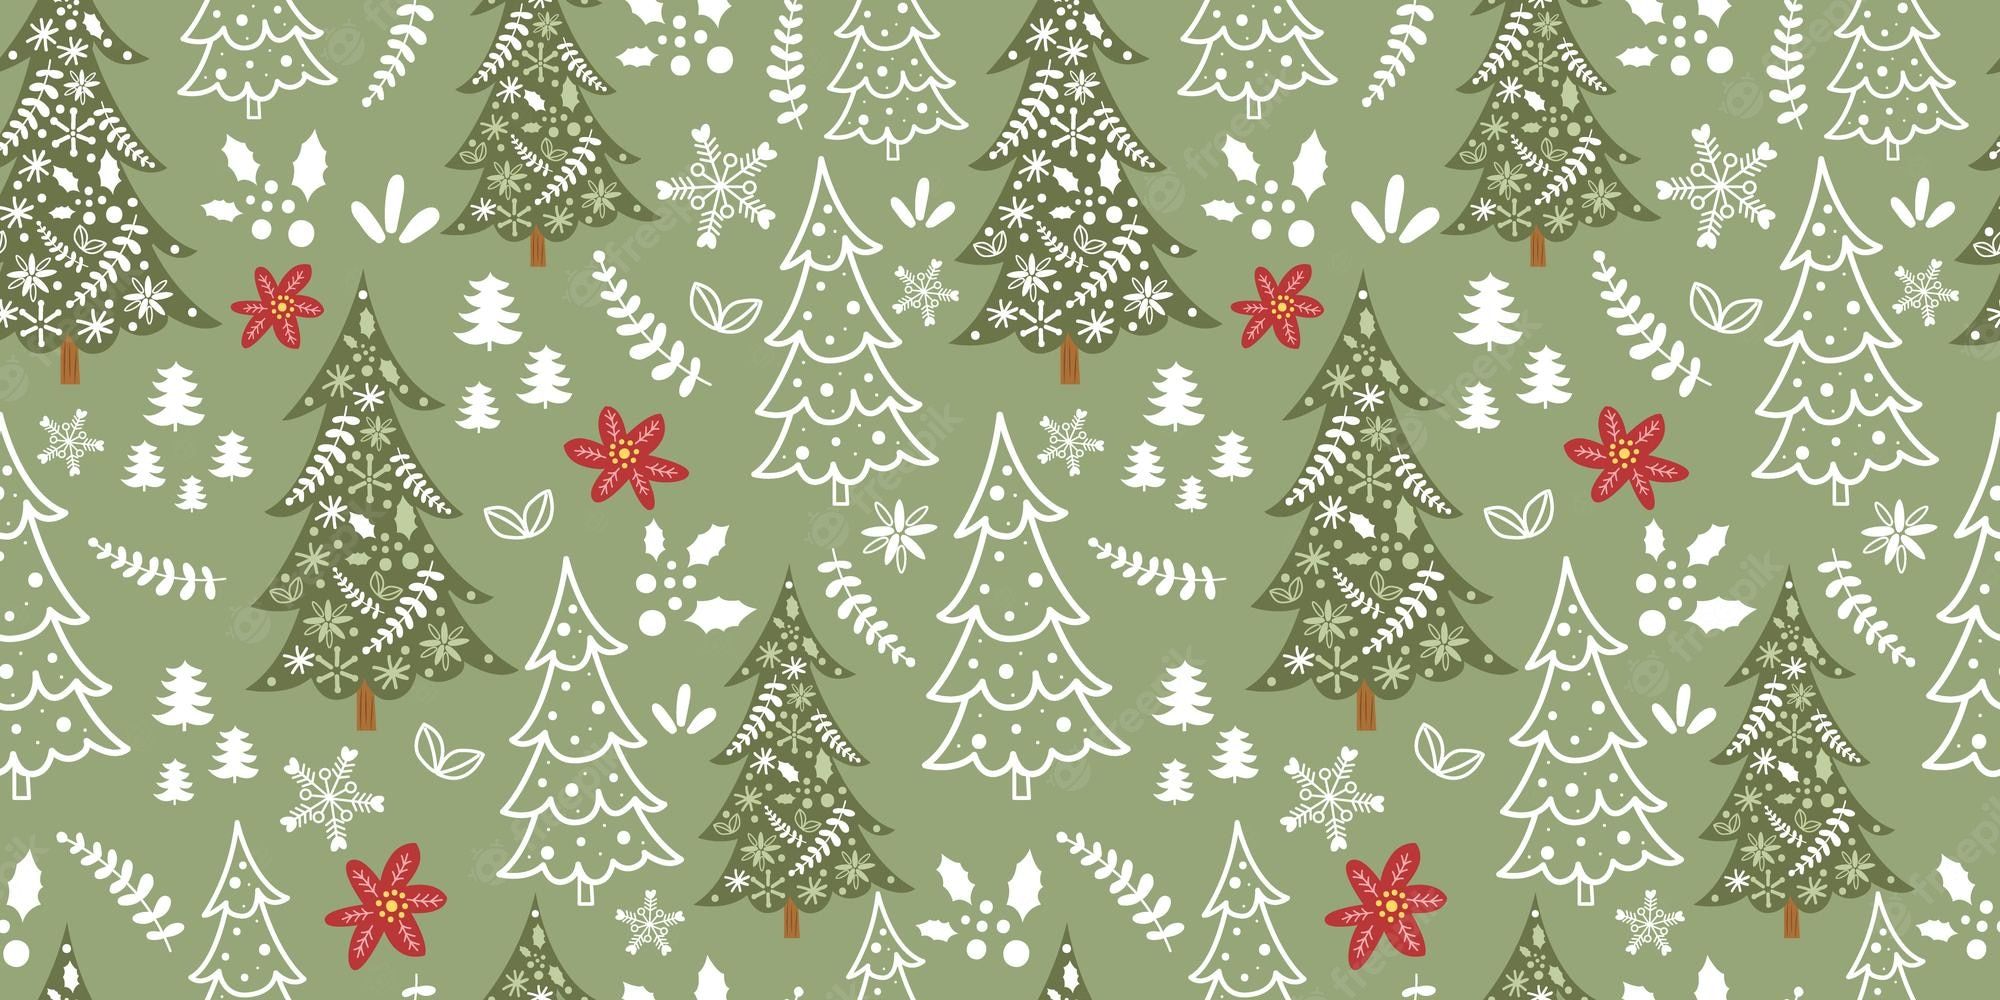 Christmas wallpaper Vectors & Illustrations for Free Download